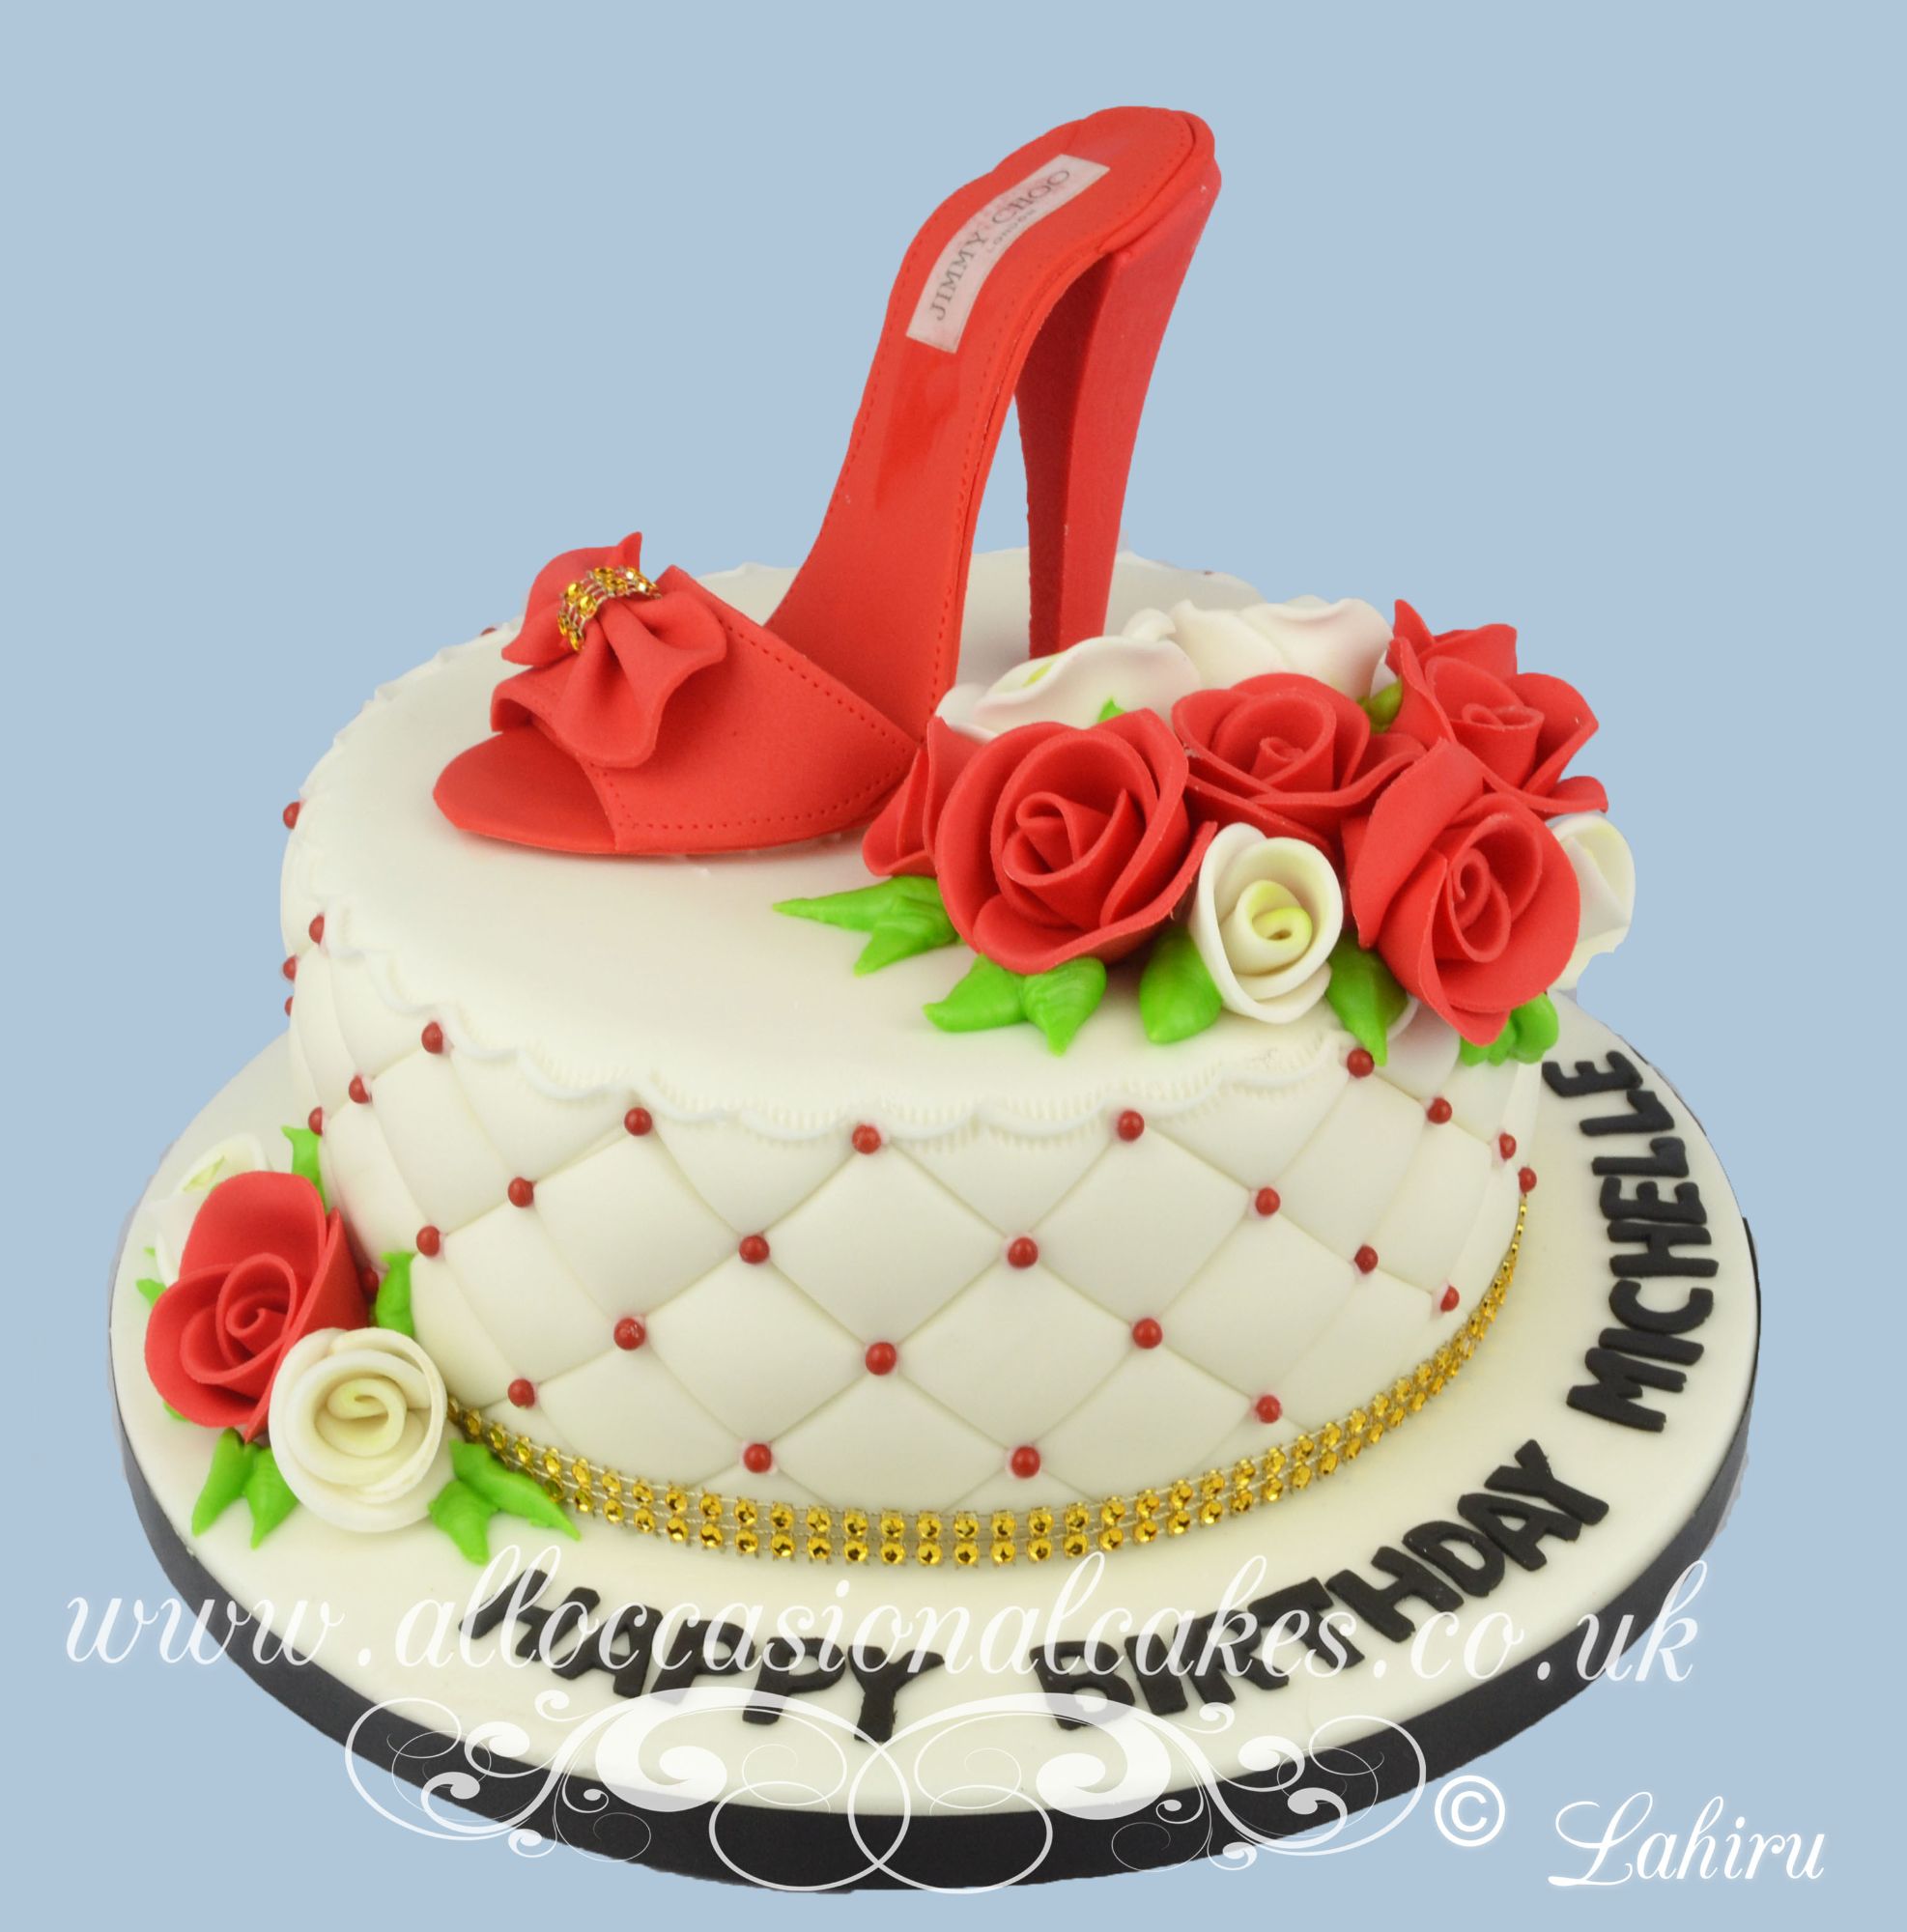 Red Rose Cake | Red birthday cakes, Red cake, Cake designs birthday